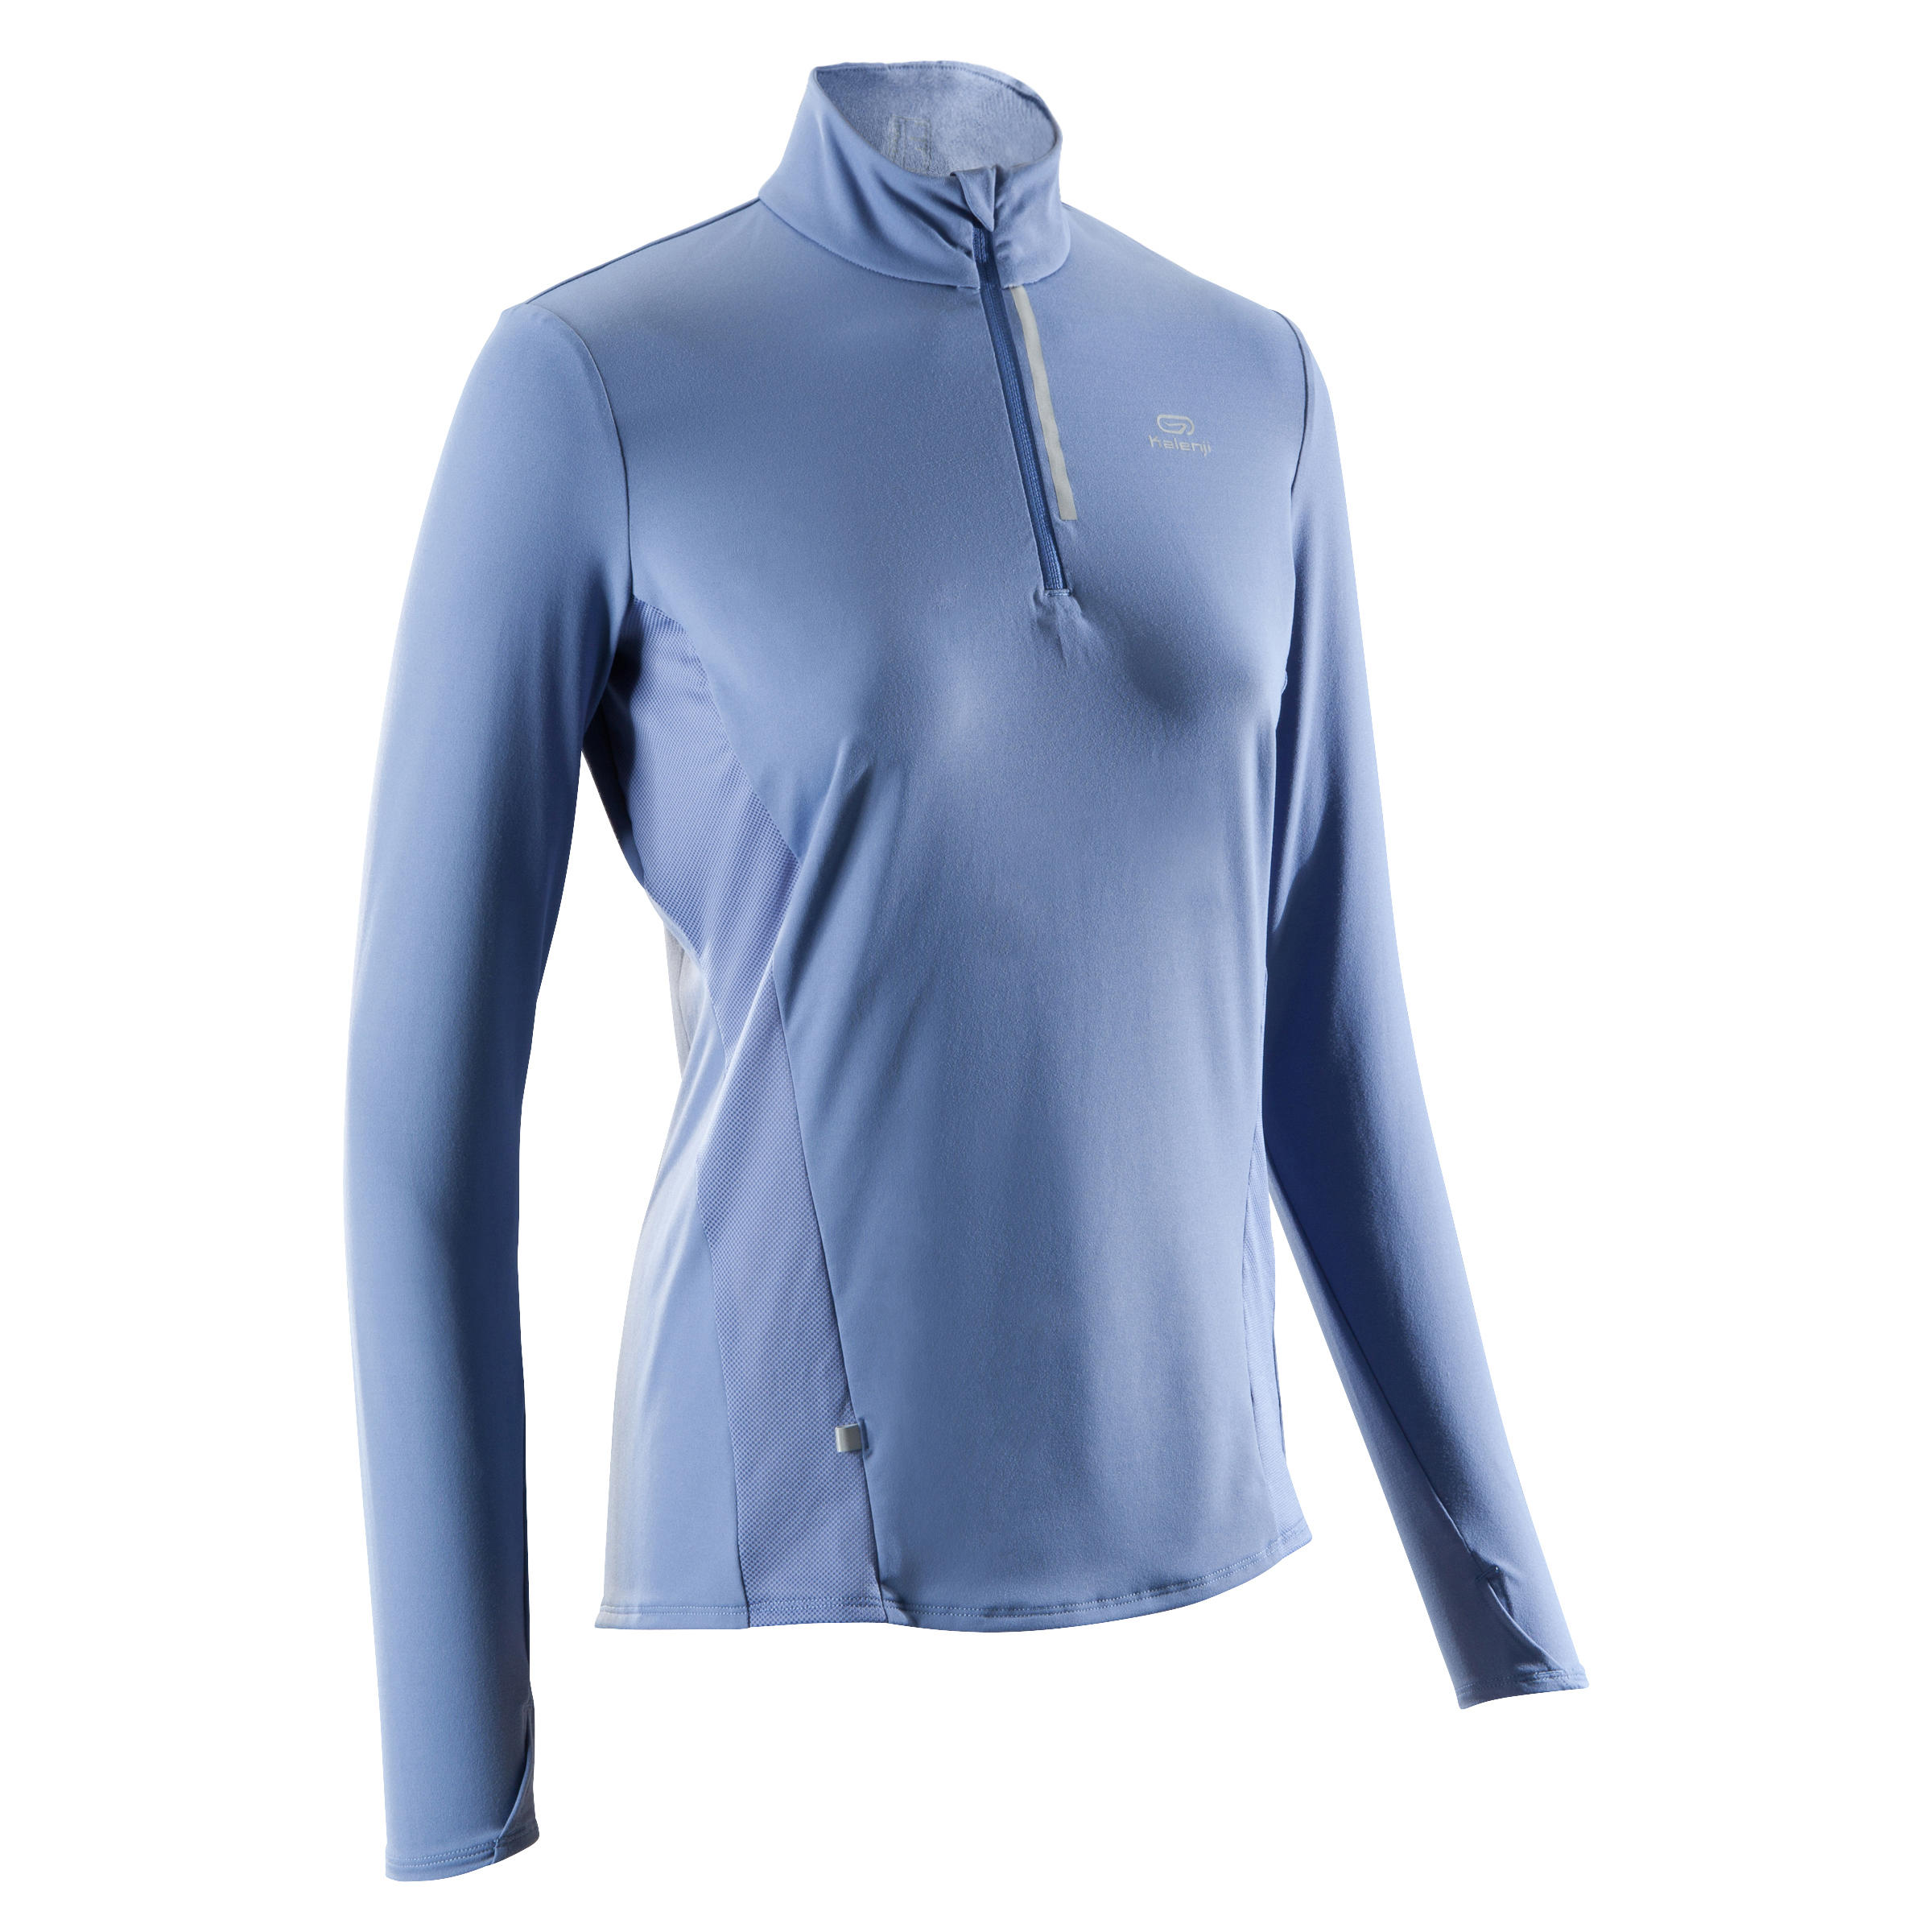 KALENJI Women's Jogging Long-Sleeved Jersey Run Dry+ Zip - Storm Blue